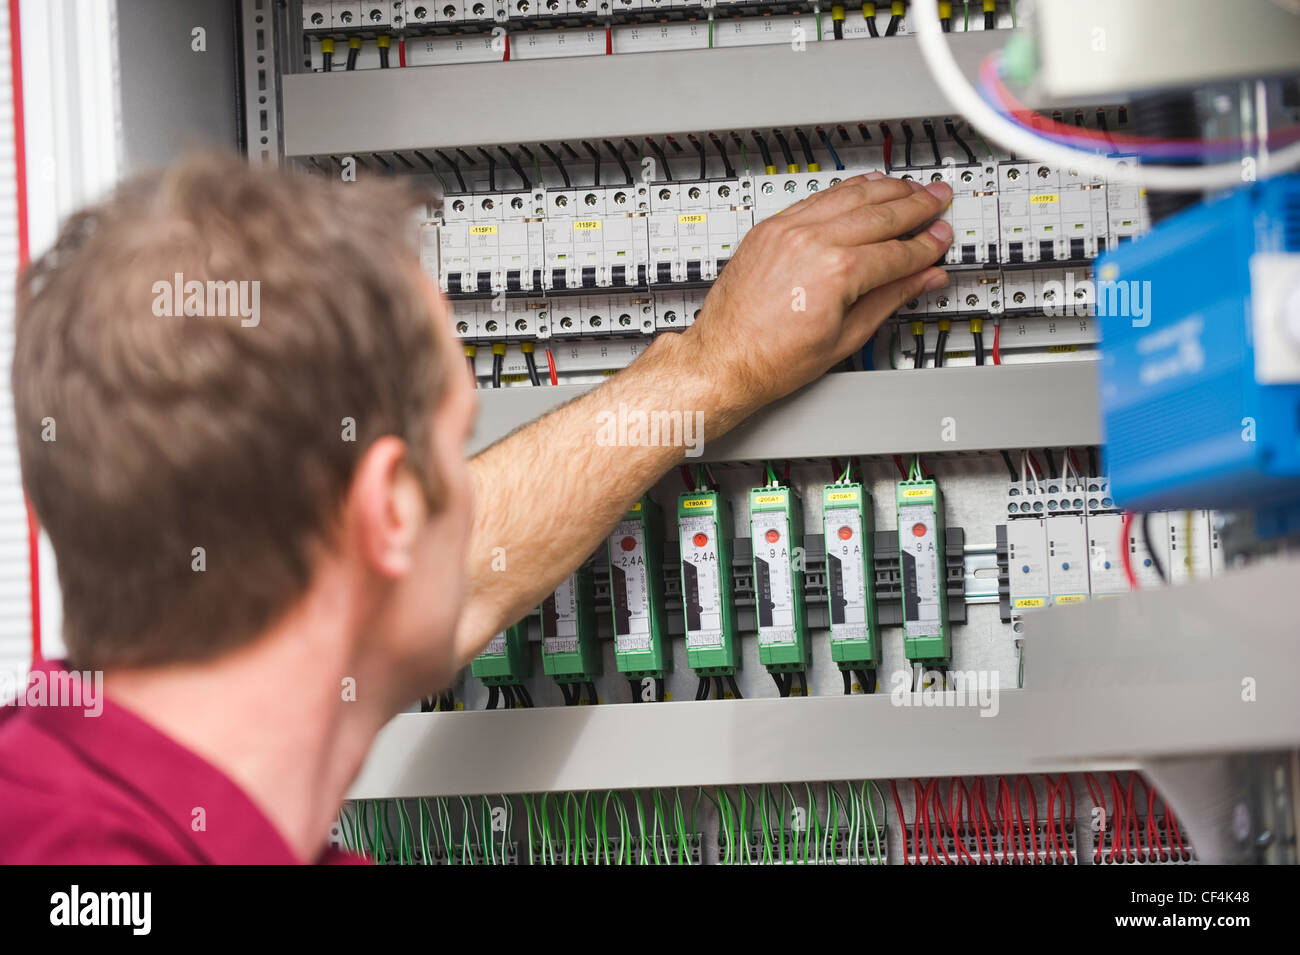 Germany, Munich, Technician checking switch button of circuit board Stock Photo